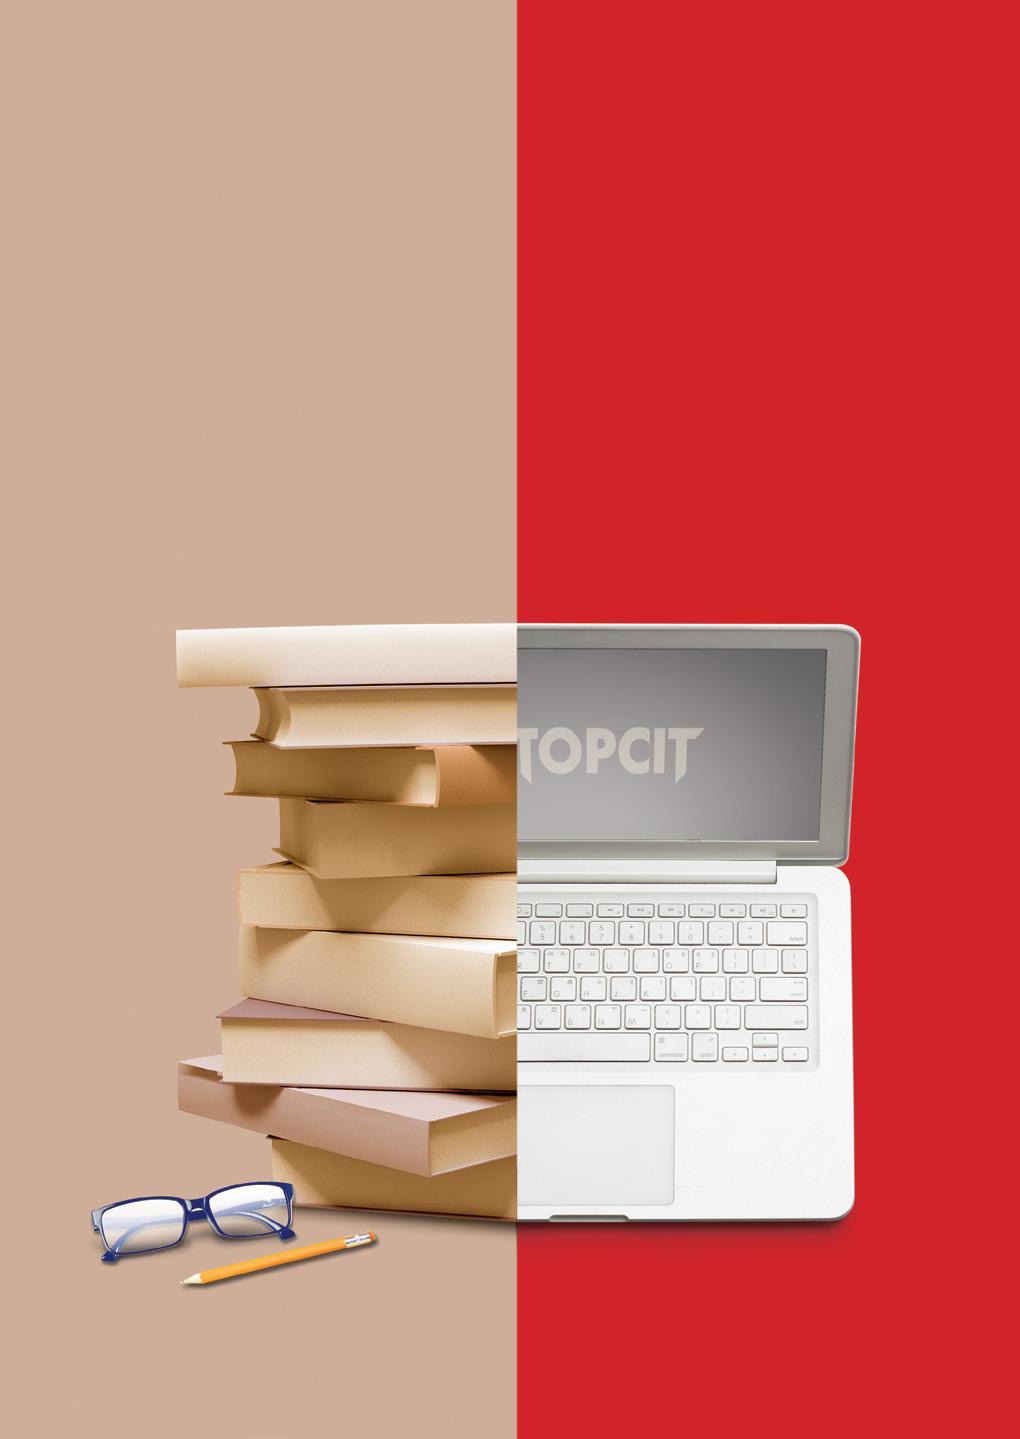 TOPCIT 소개 산업현장에서통하는 ICT 역량지수 TOPCIT TOPCIT Test Of Practical Competency in ICT